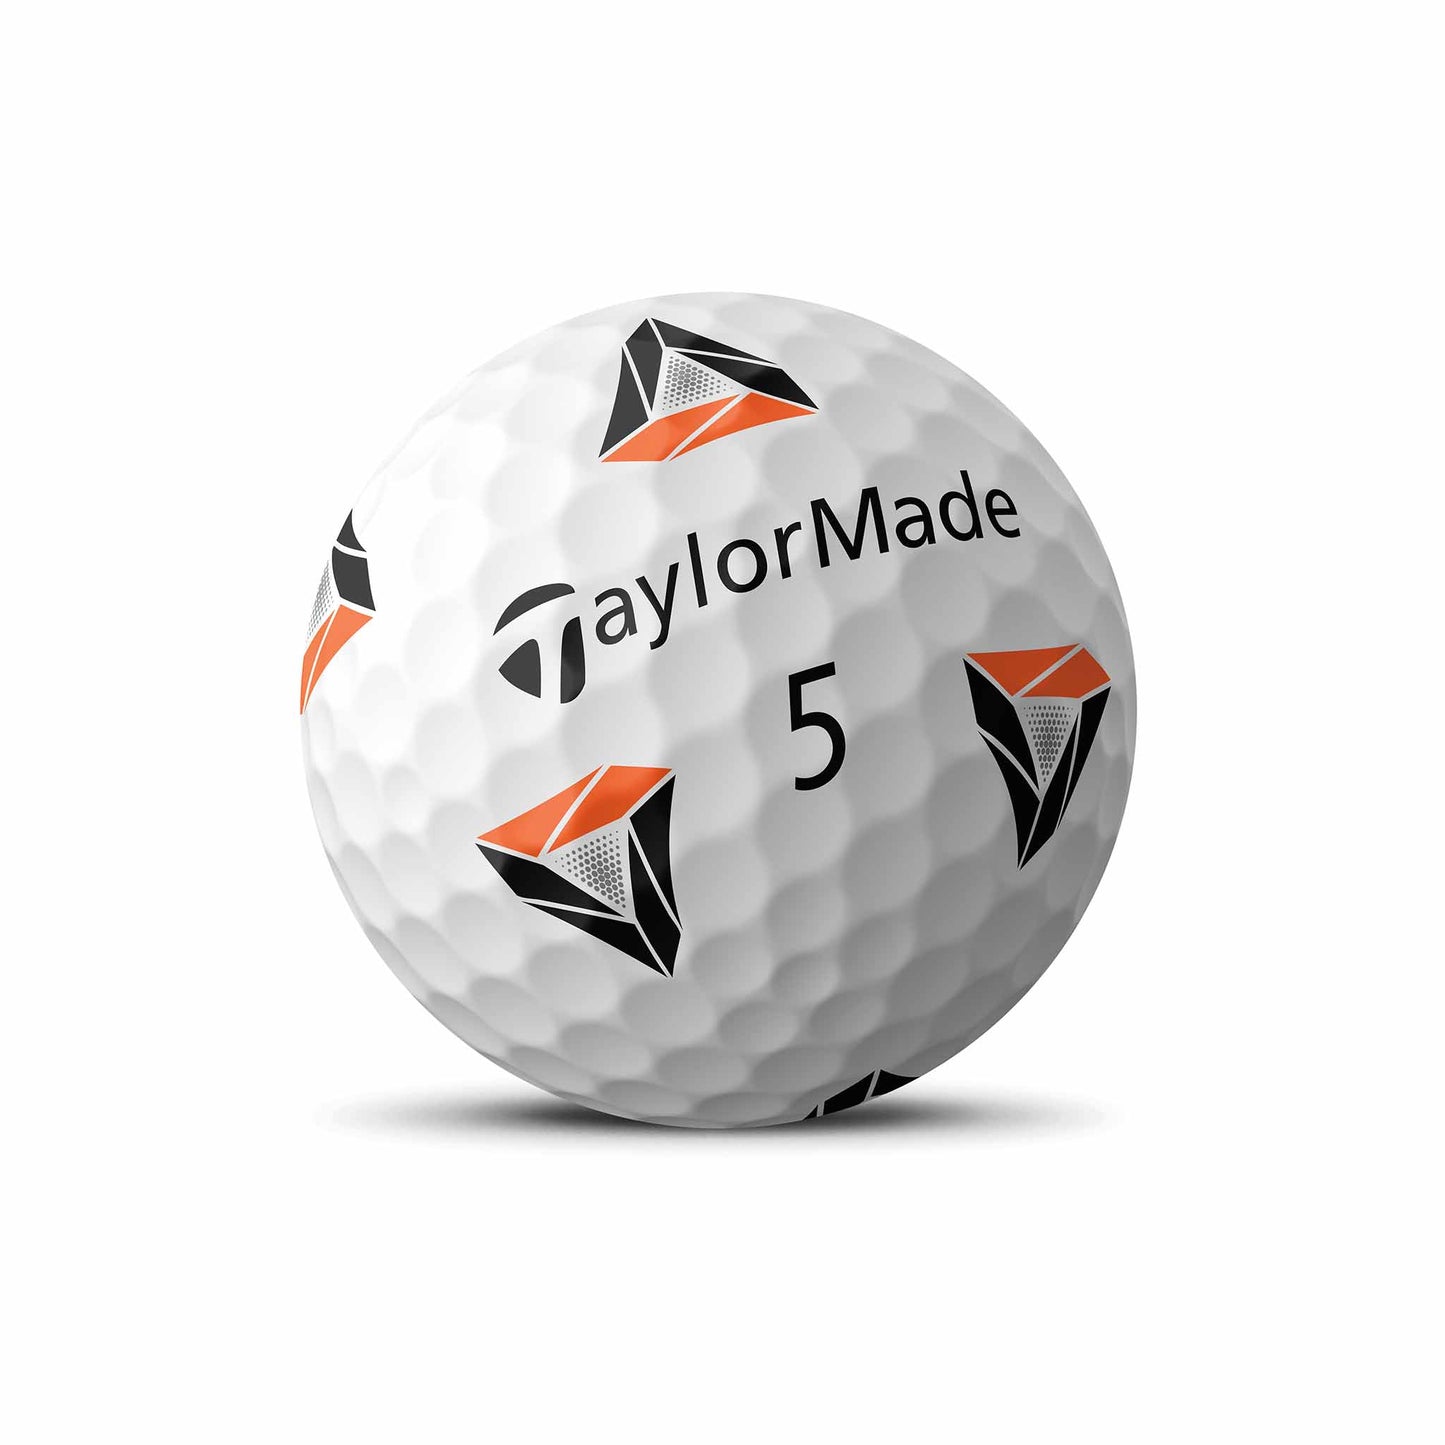 TaylorMade TP5 pix2.0